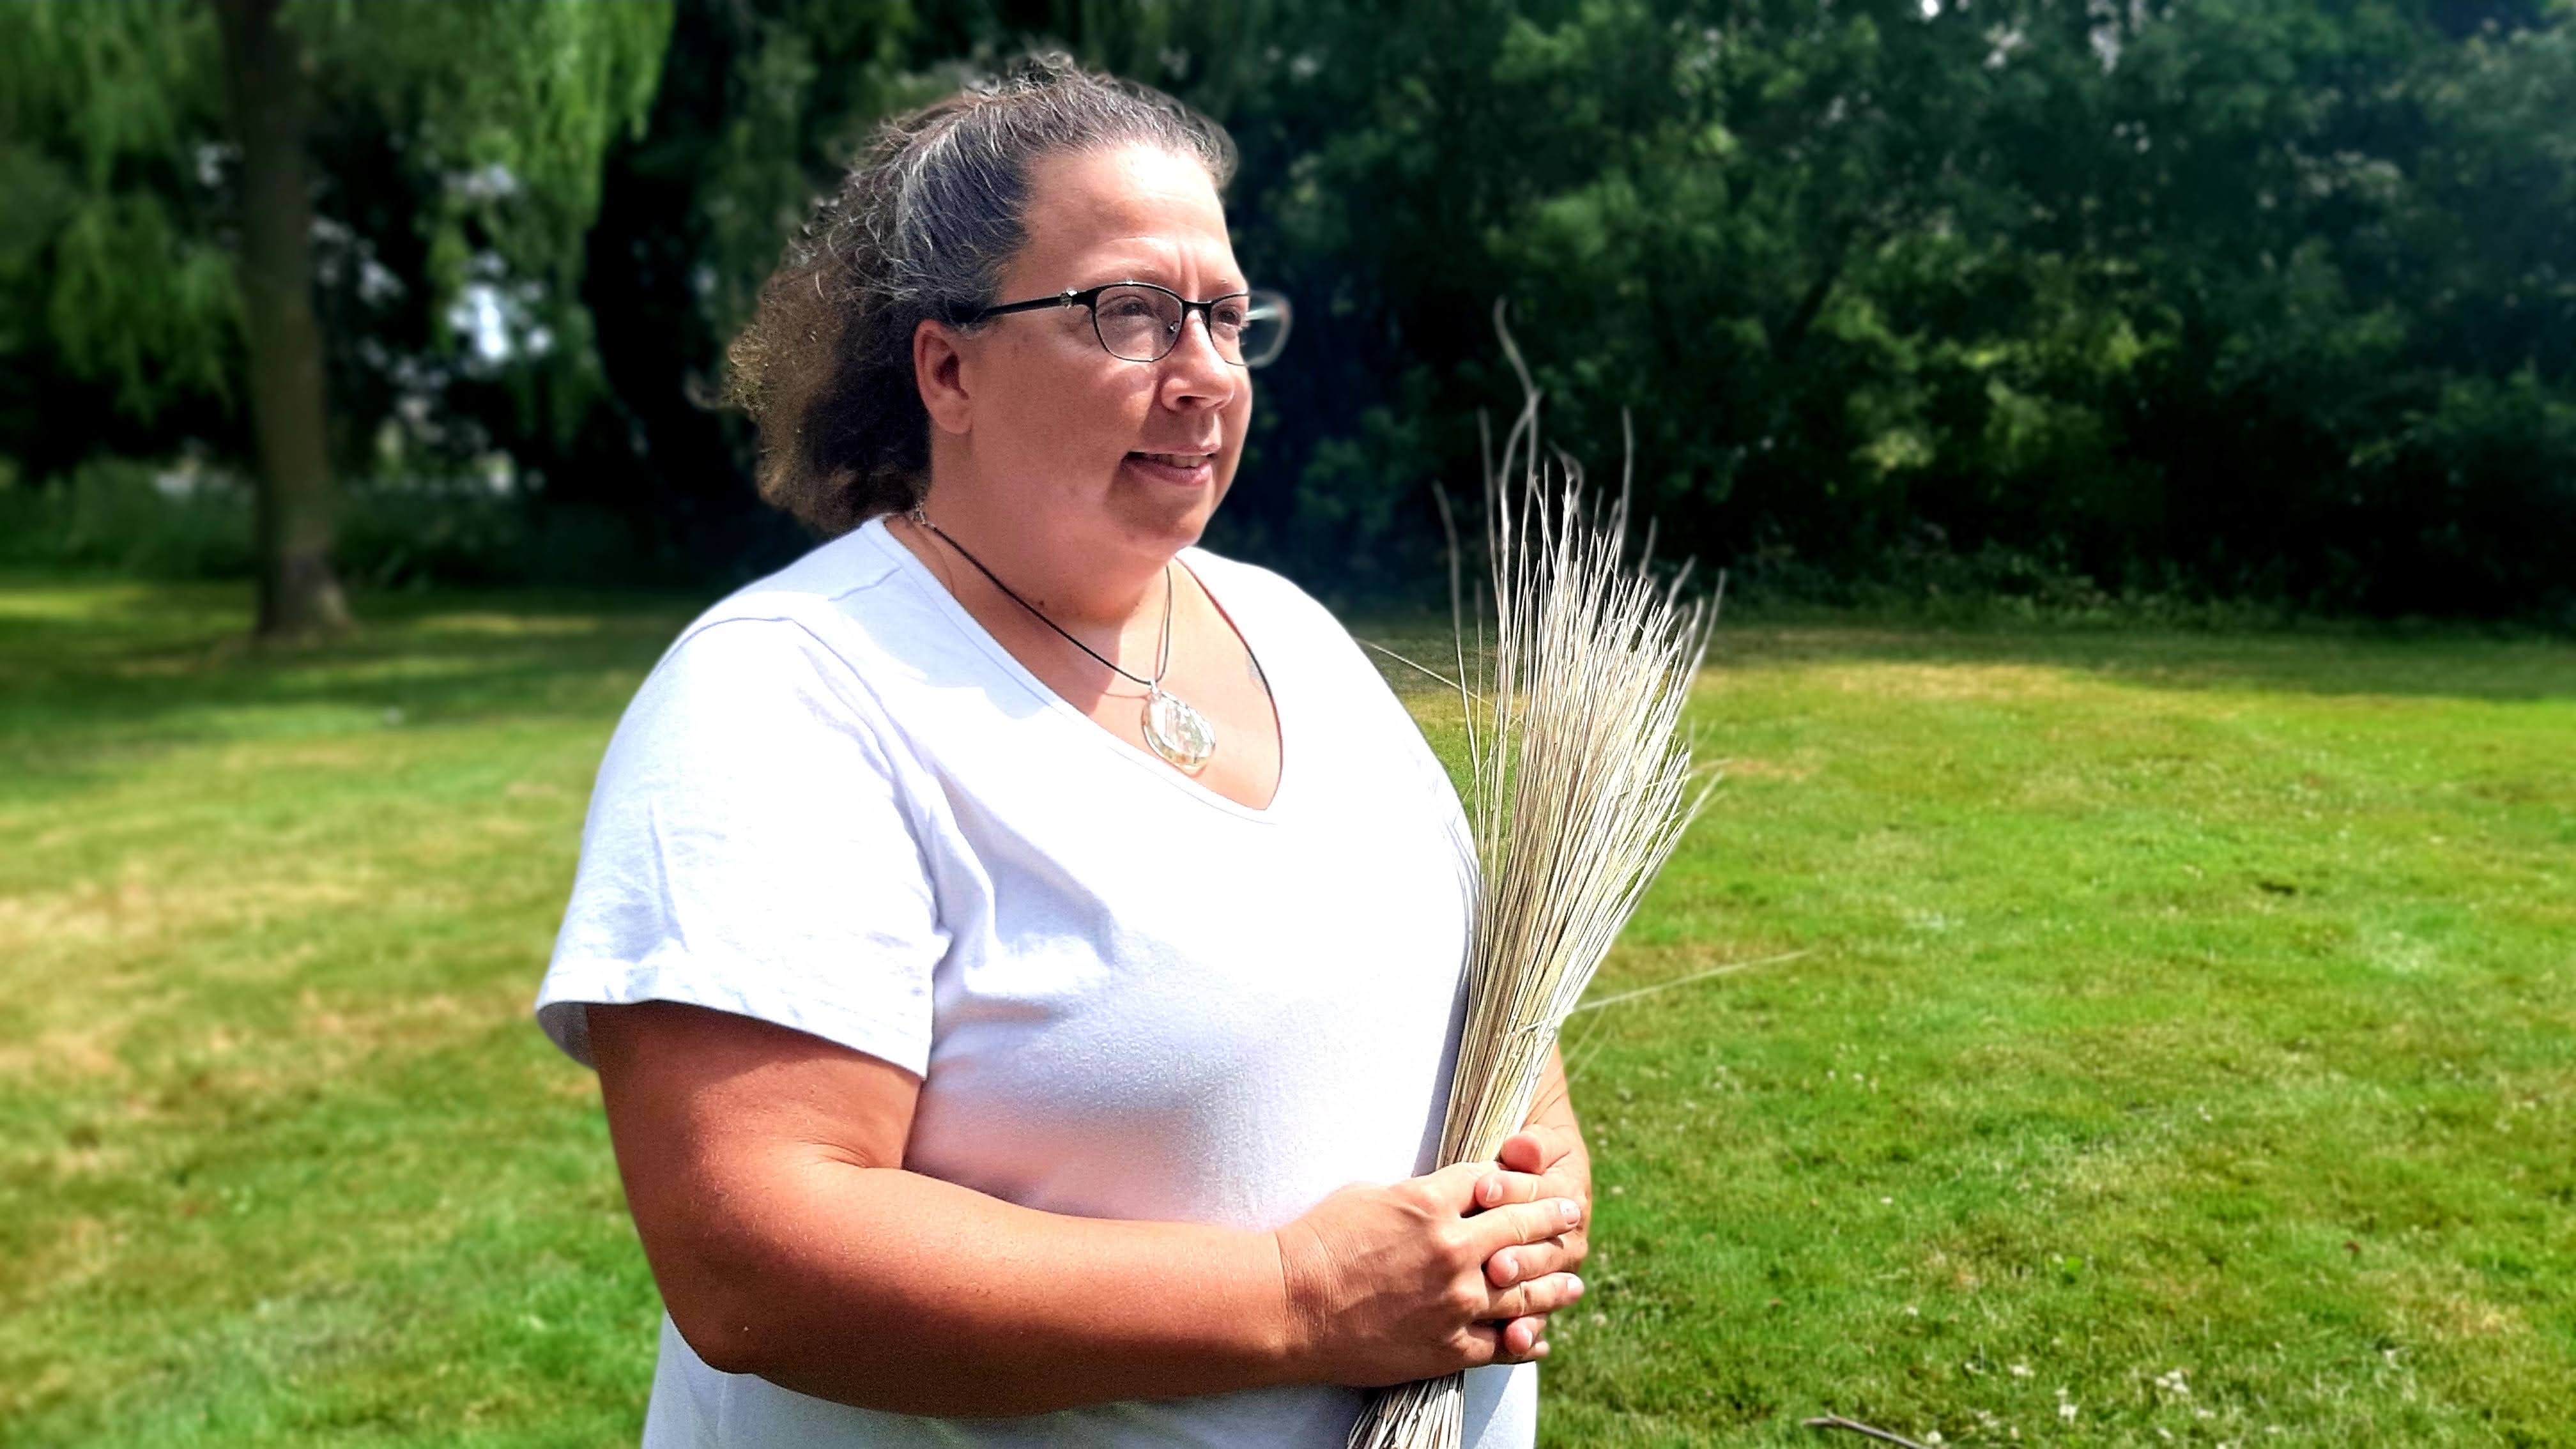 Métis educator Tammy Gagnon, holding a bushel of sacred sweetgrass that she harvested the previous day. (Photo: Nigel Gordijk)